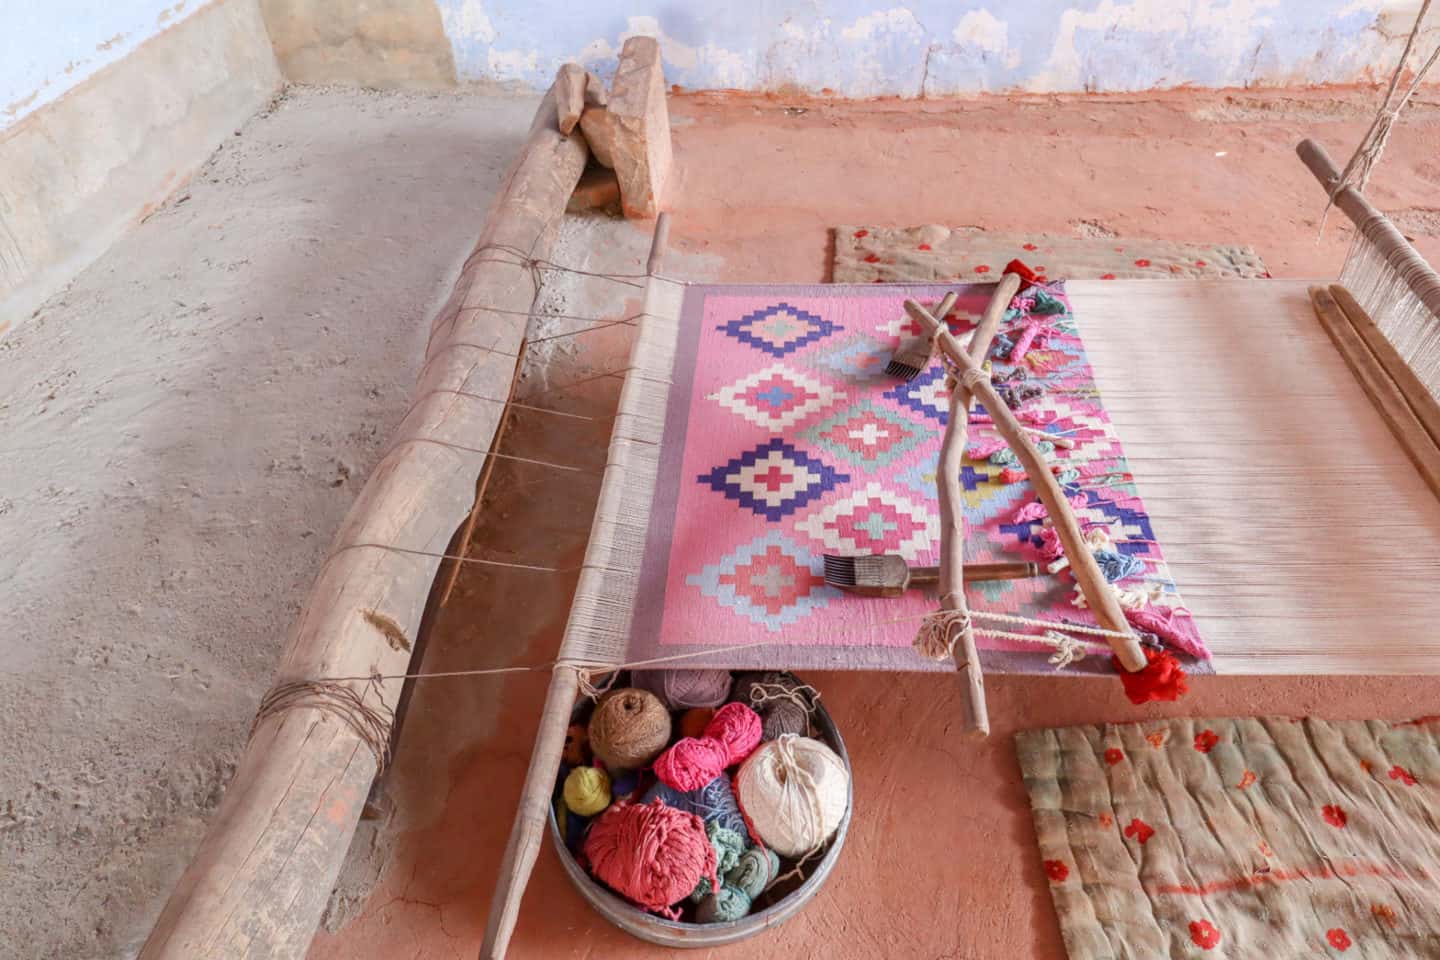 Homestay in Jodhpur Rural Rajasthan India Village